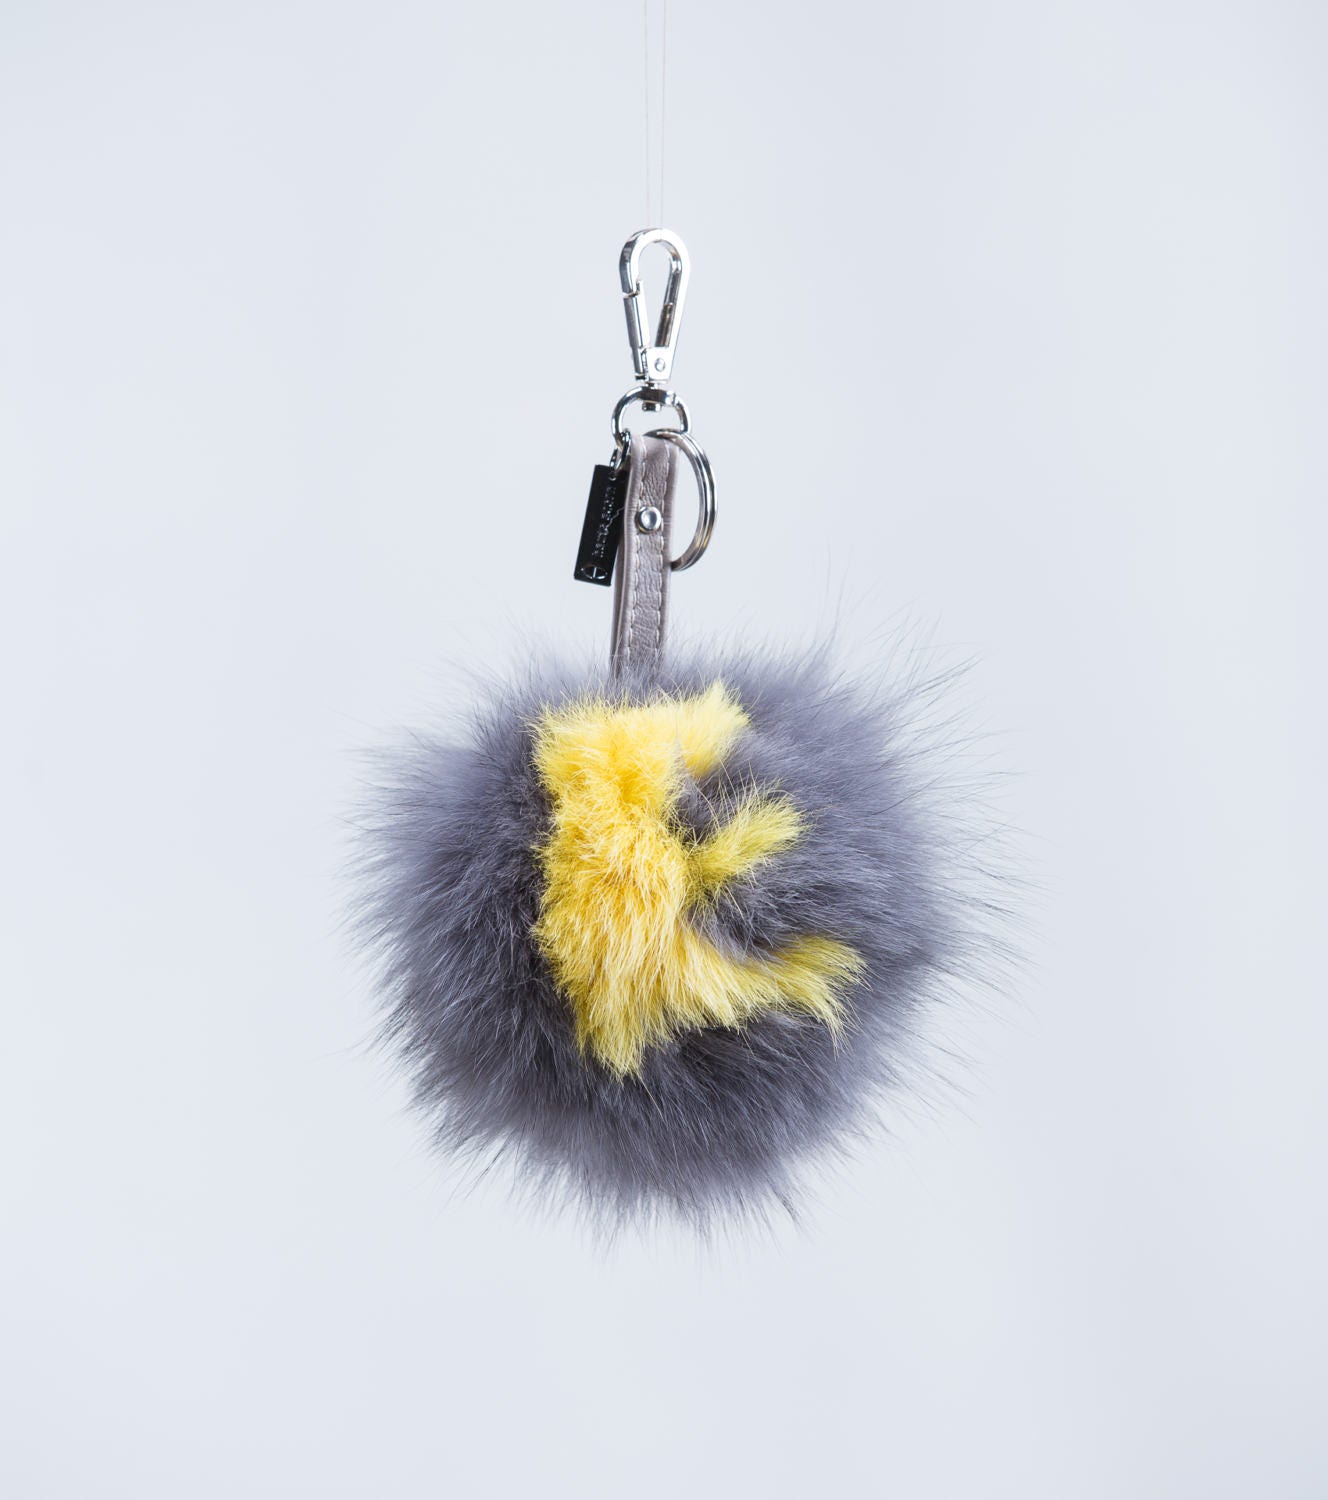 Real fur bag charm, fur keychain, fur pom pom, fur ball by